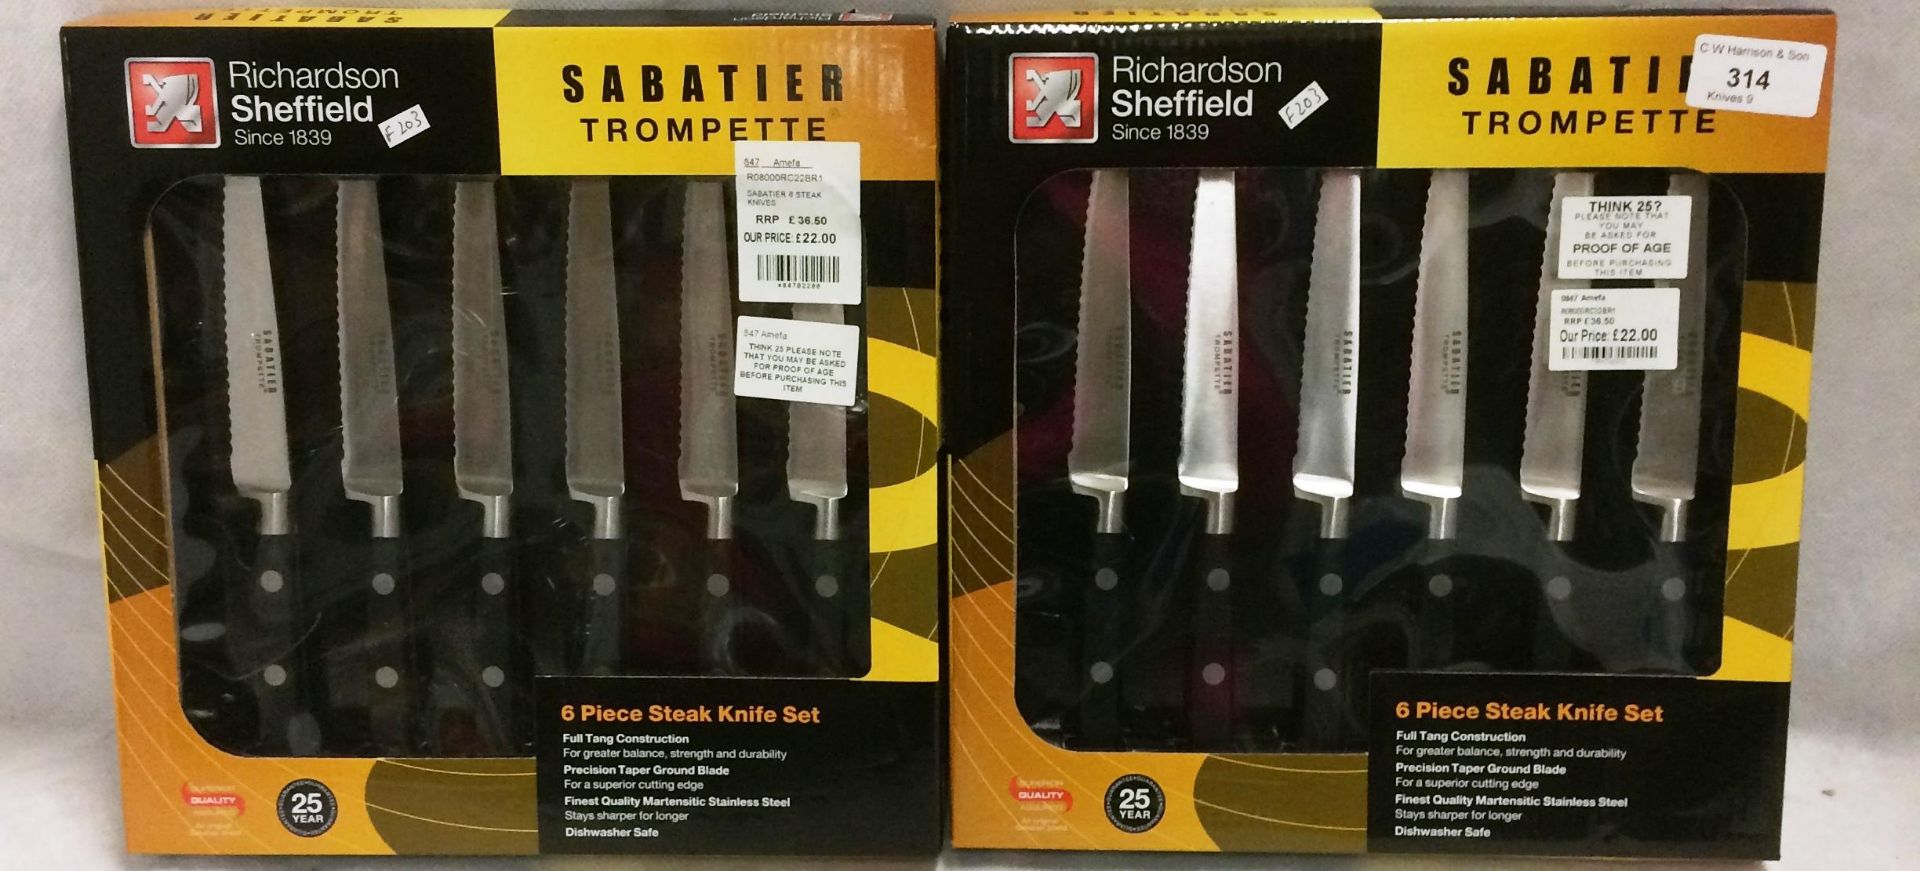 2 x Richardson of Sheffield Sabatier Trompette 6 piece steak knife sets RRP £36.